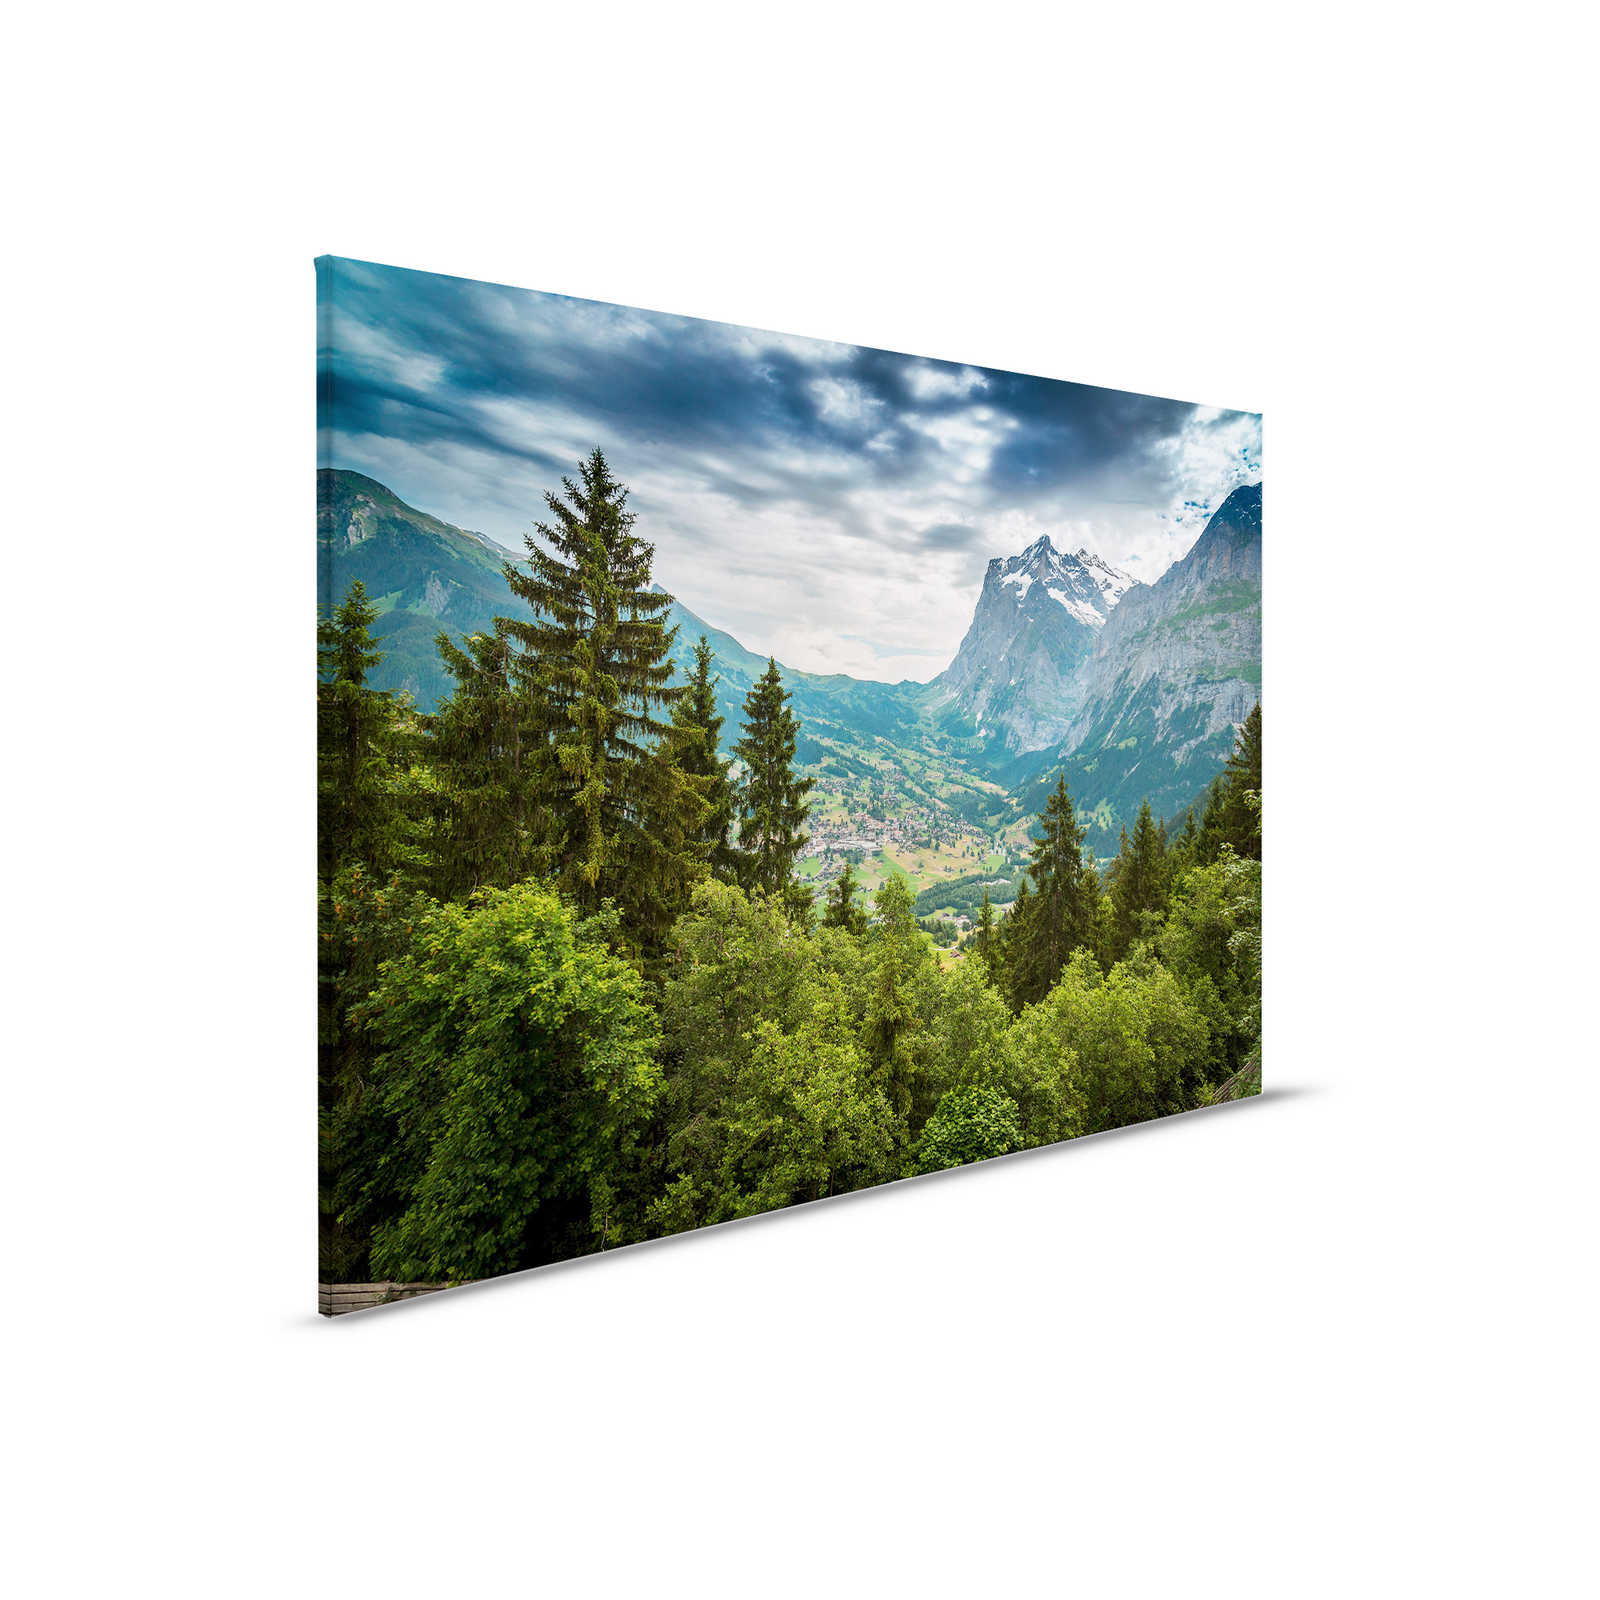         Canvas with mountain landscape - 0.90 m x 0.60 m
    